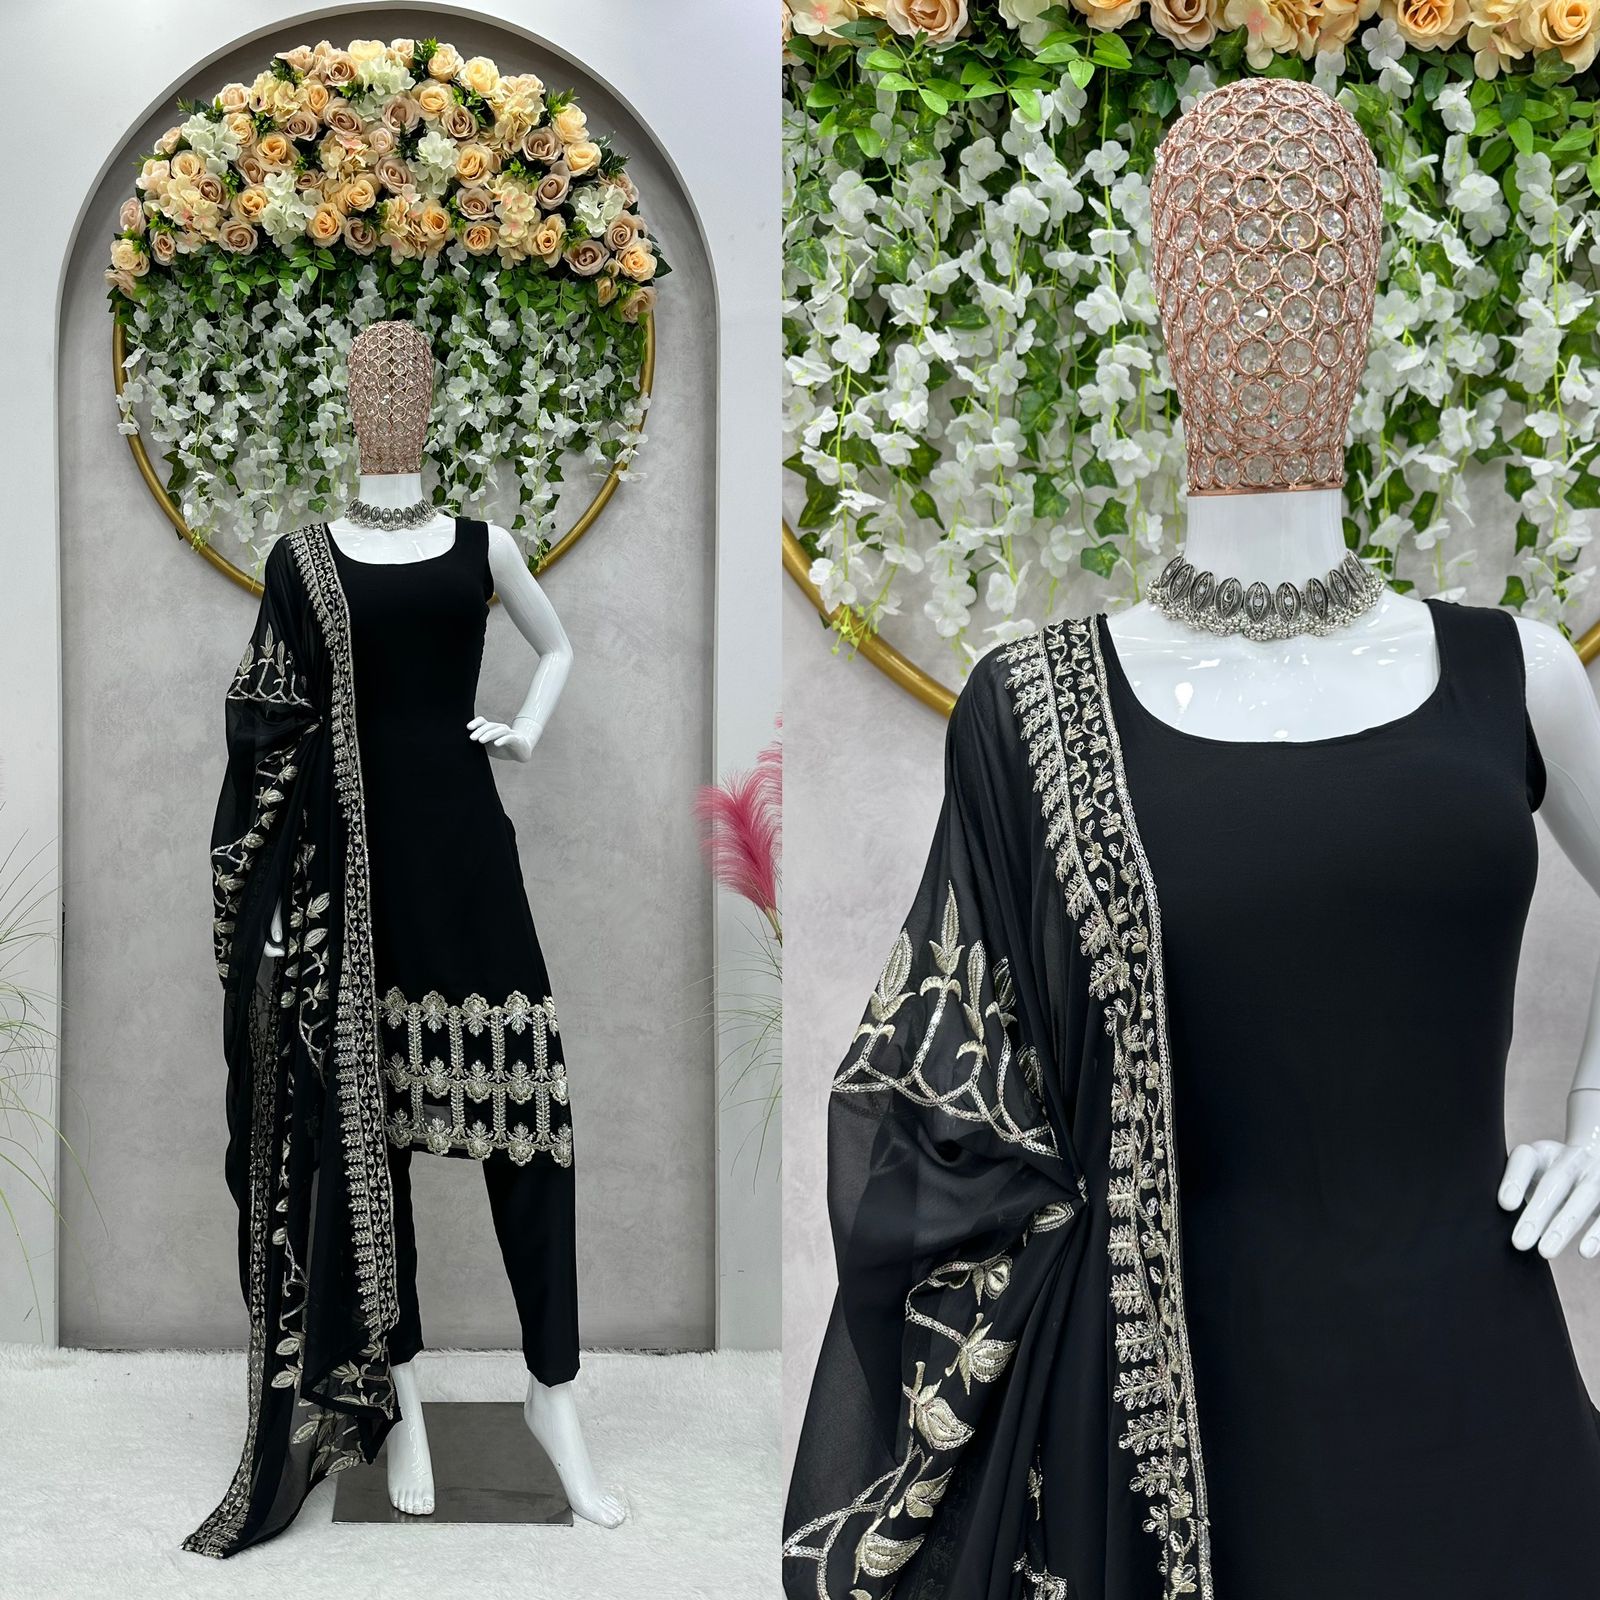 Pakistani Kurti - Buy Designer Pakistani Kurtis Online at Best Price